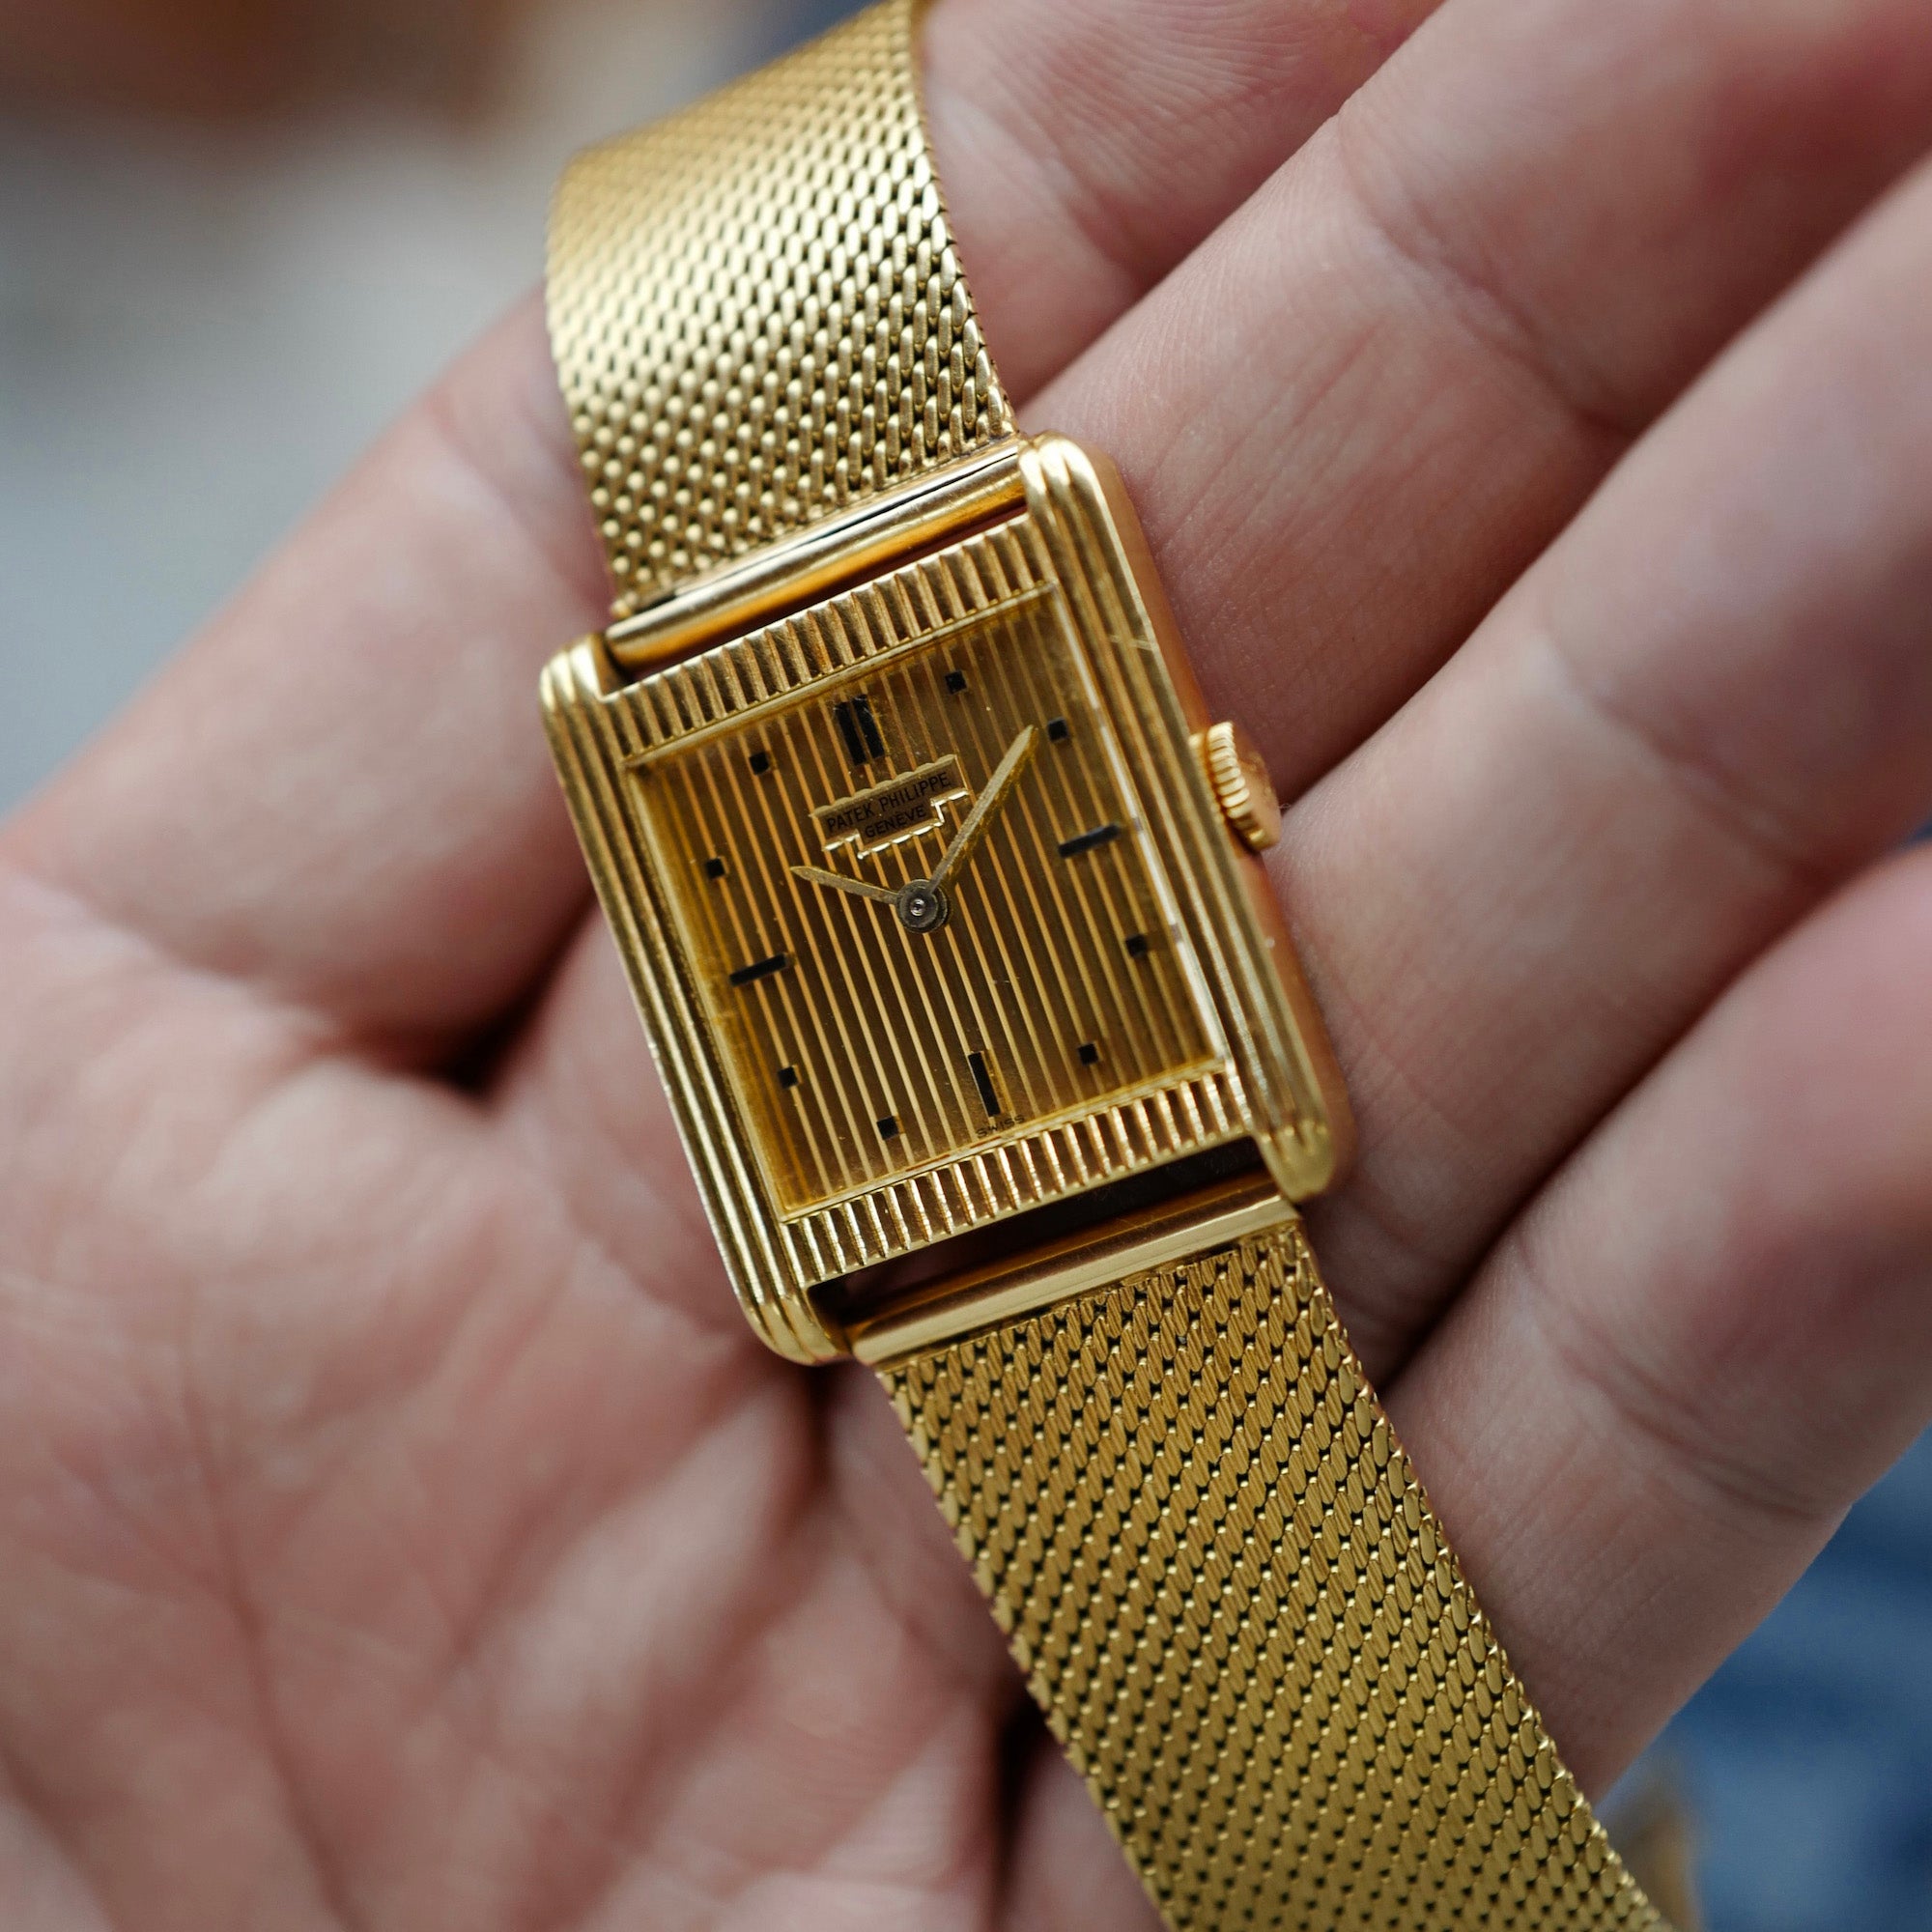 Patek Philippe - Patek Philippe Yellow Gold Watch Ref. 3467 - The Keystone Watches